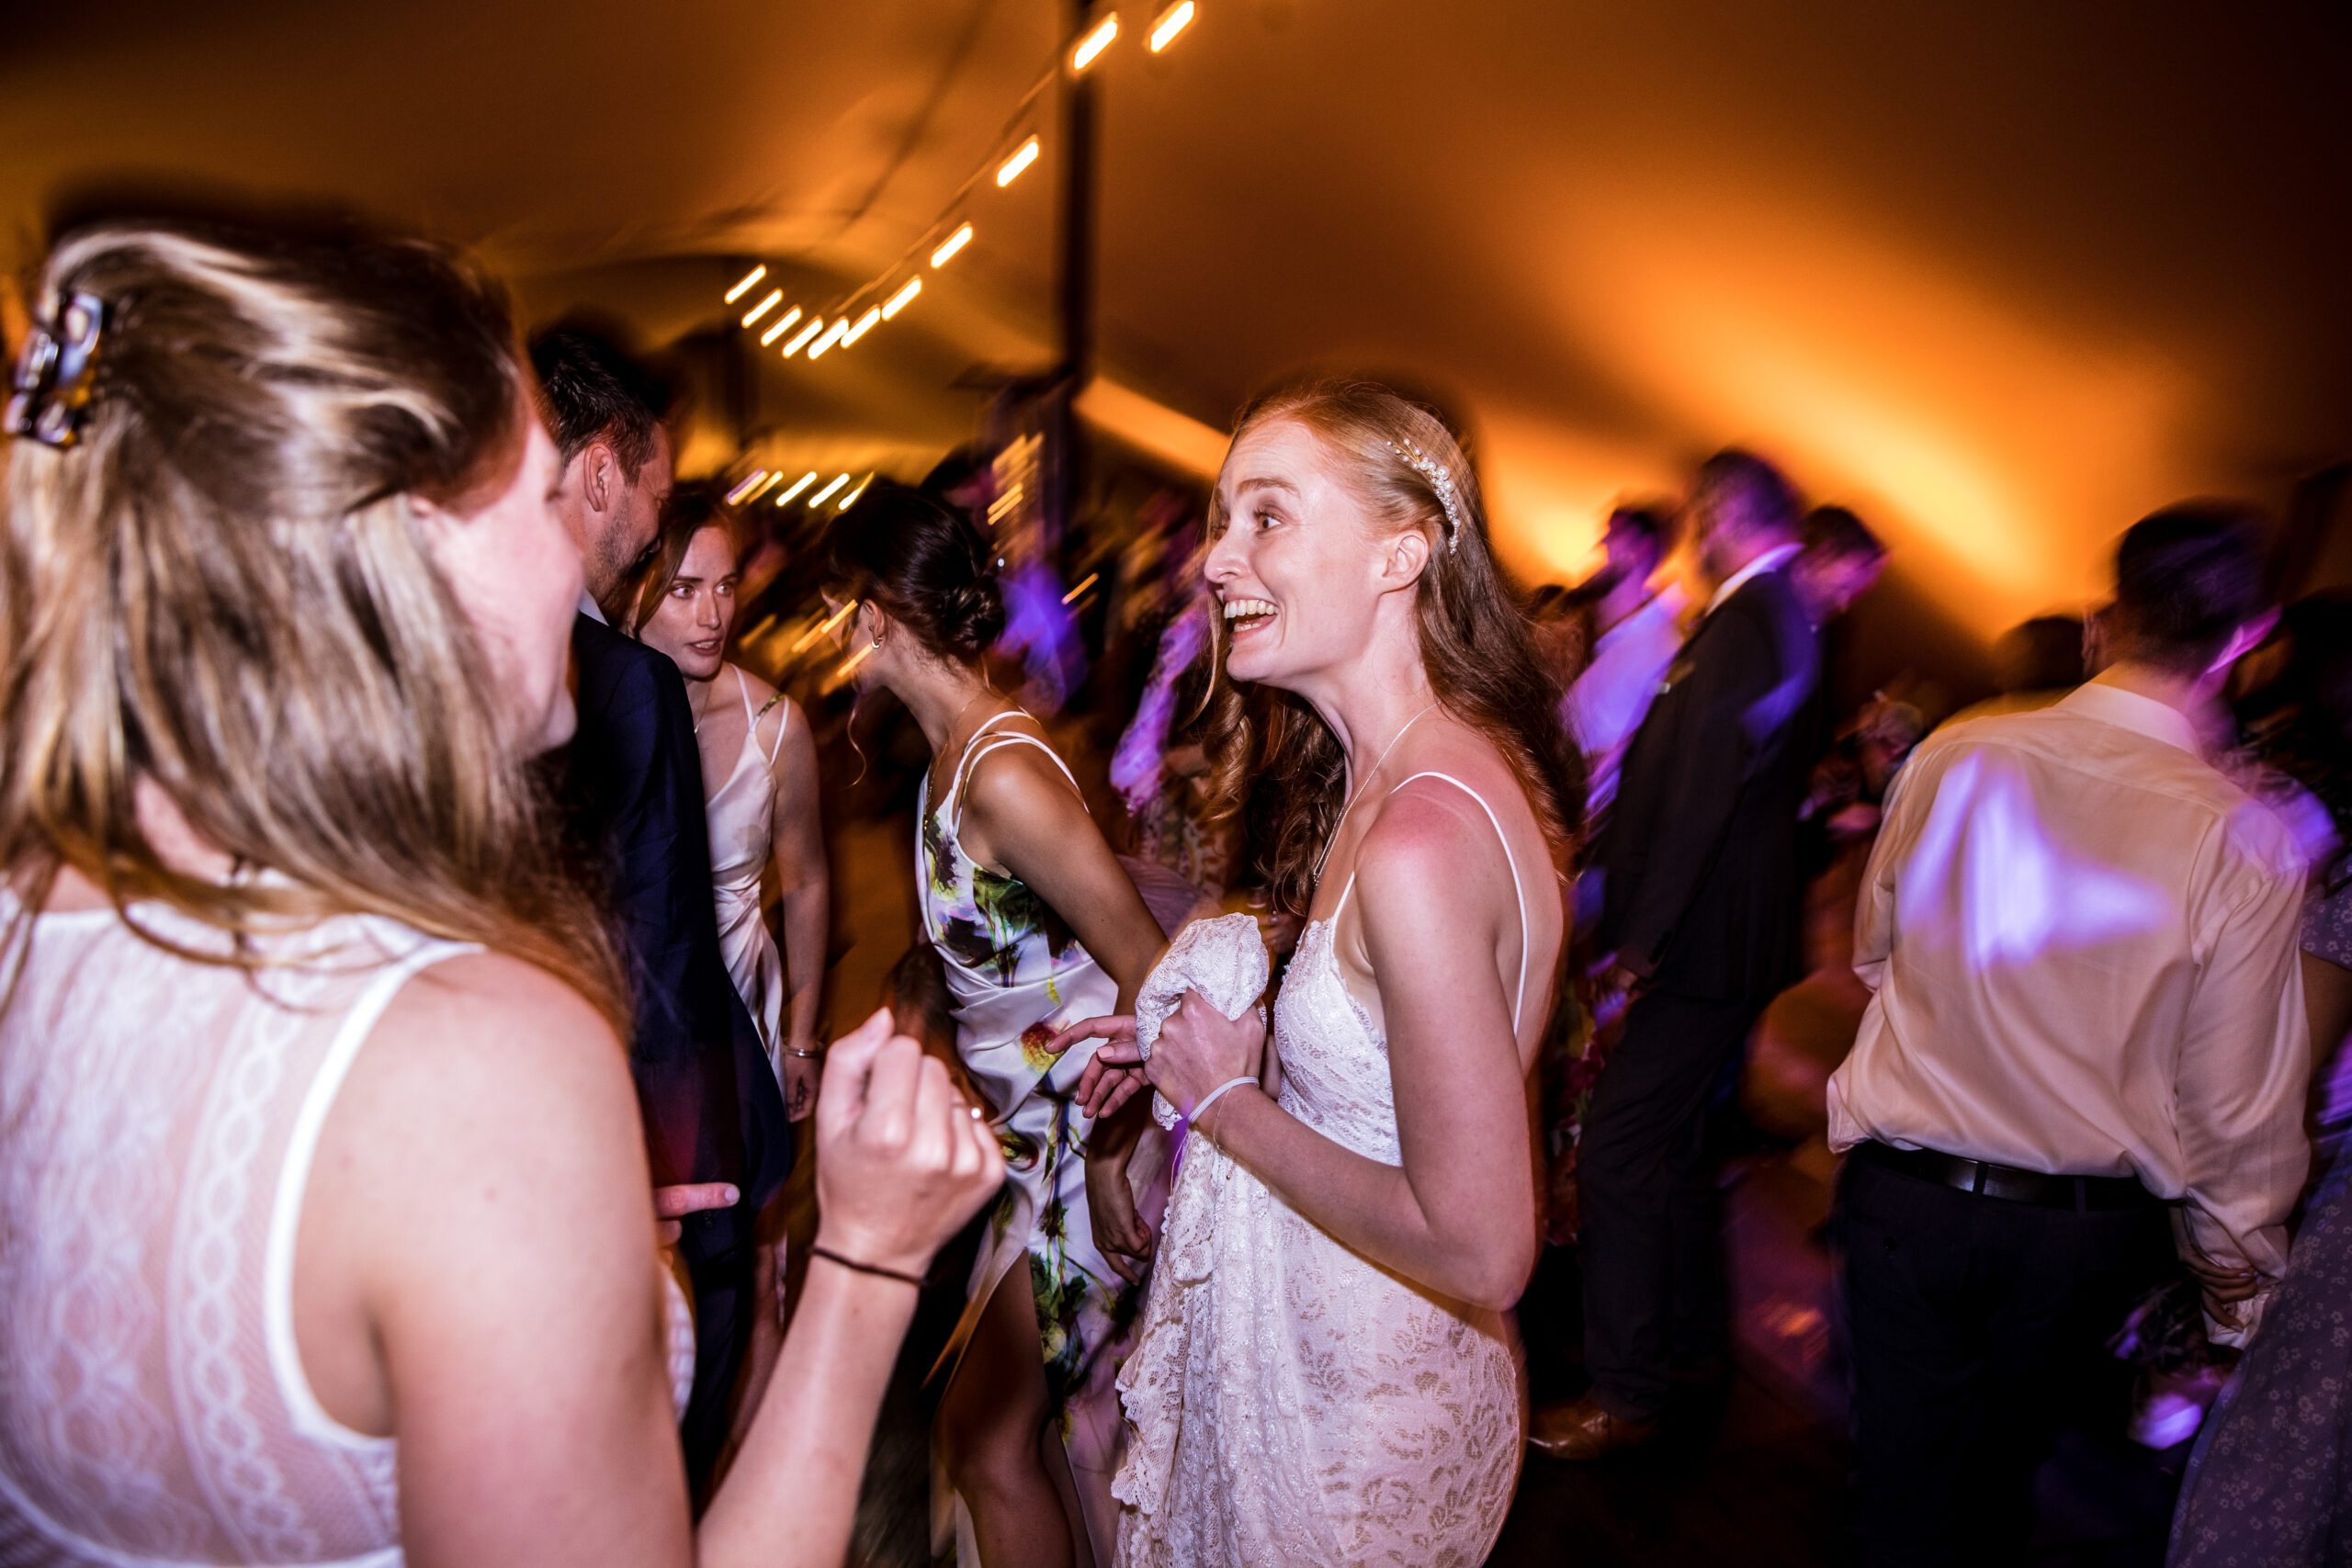 the guests dance merrily at hertfordshire garden wedding